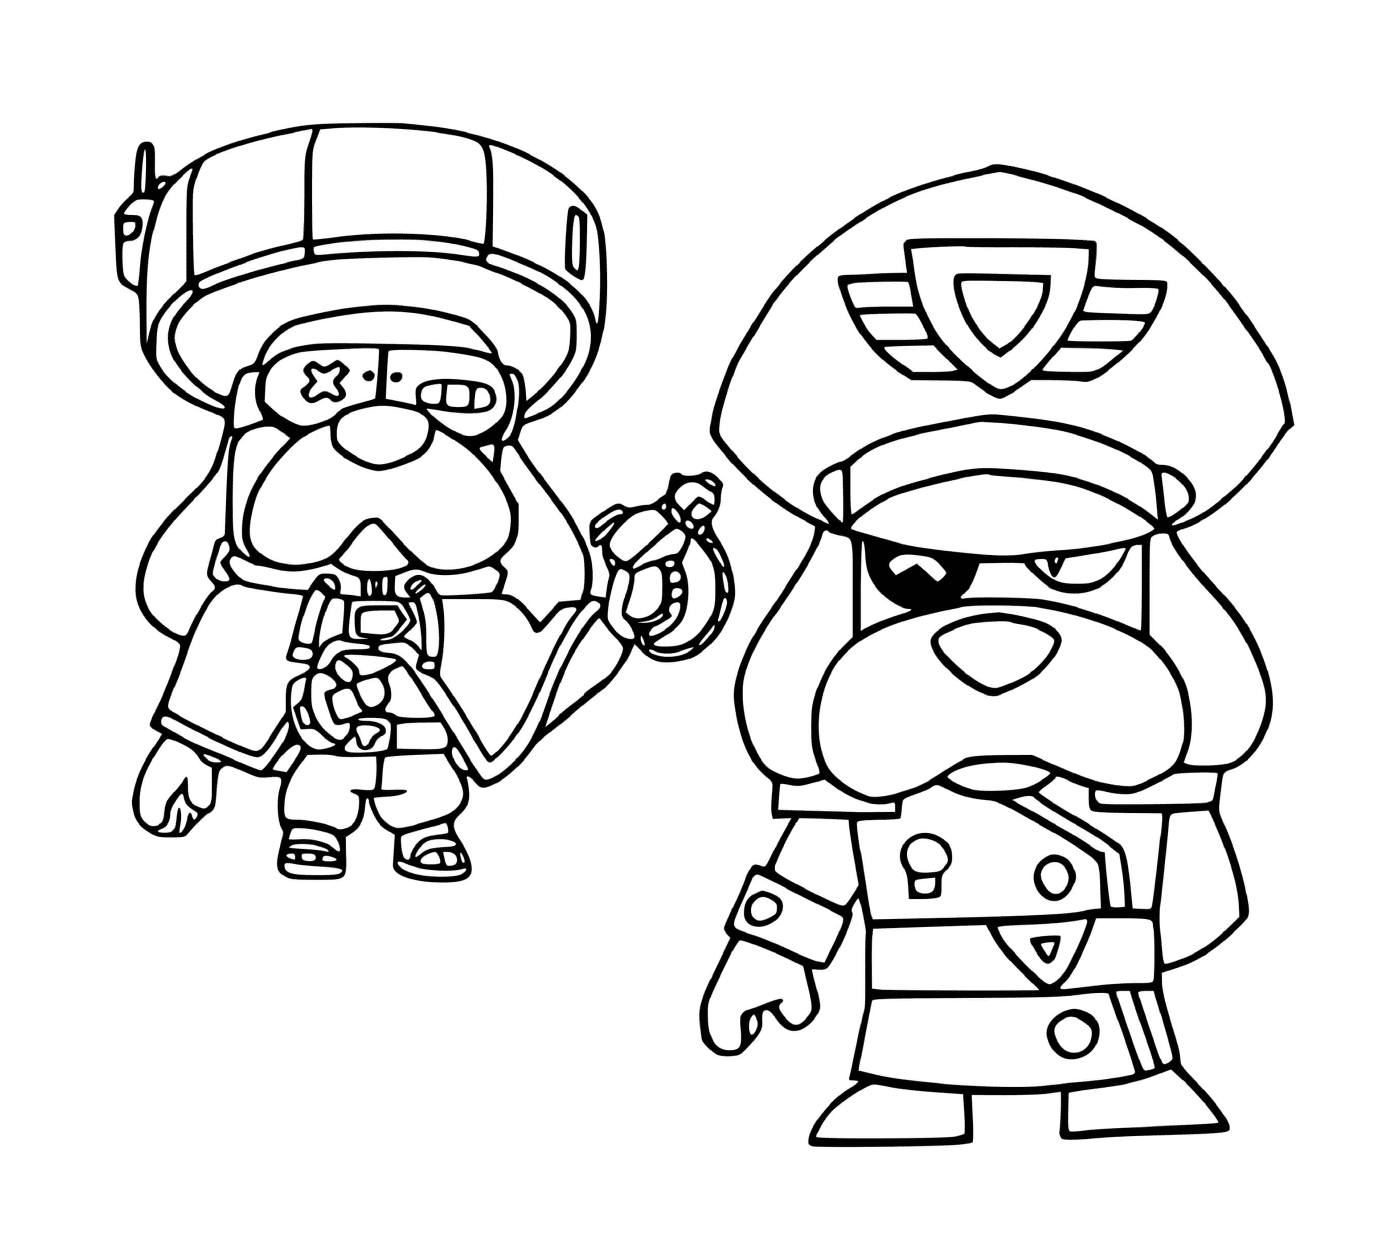  ¡Dos personajes animados listos para luchar! 